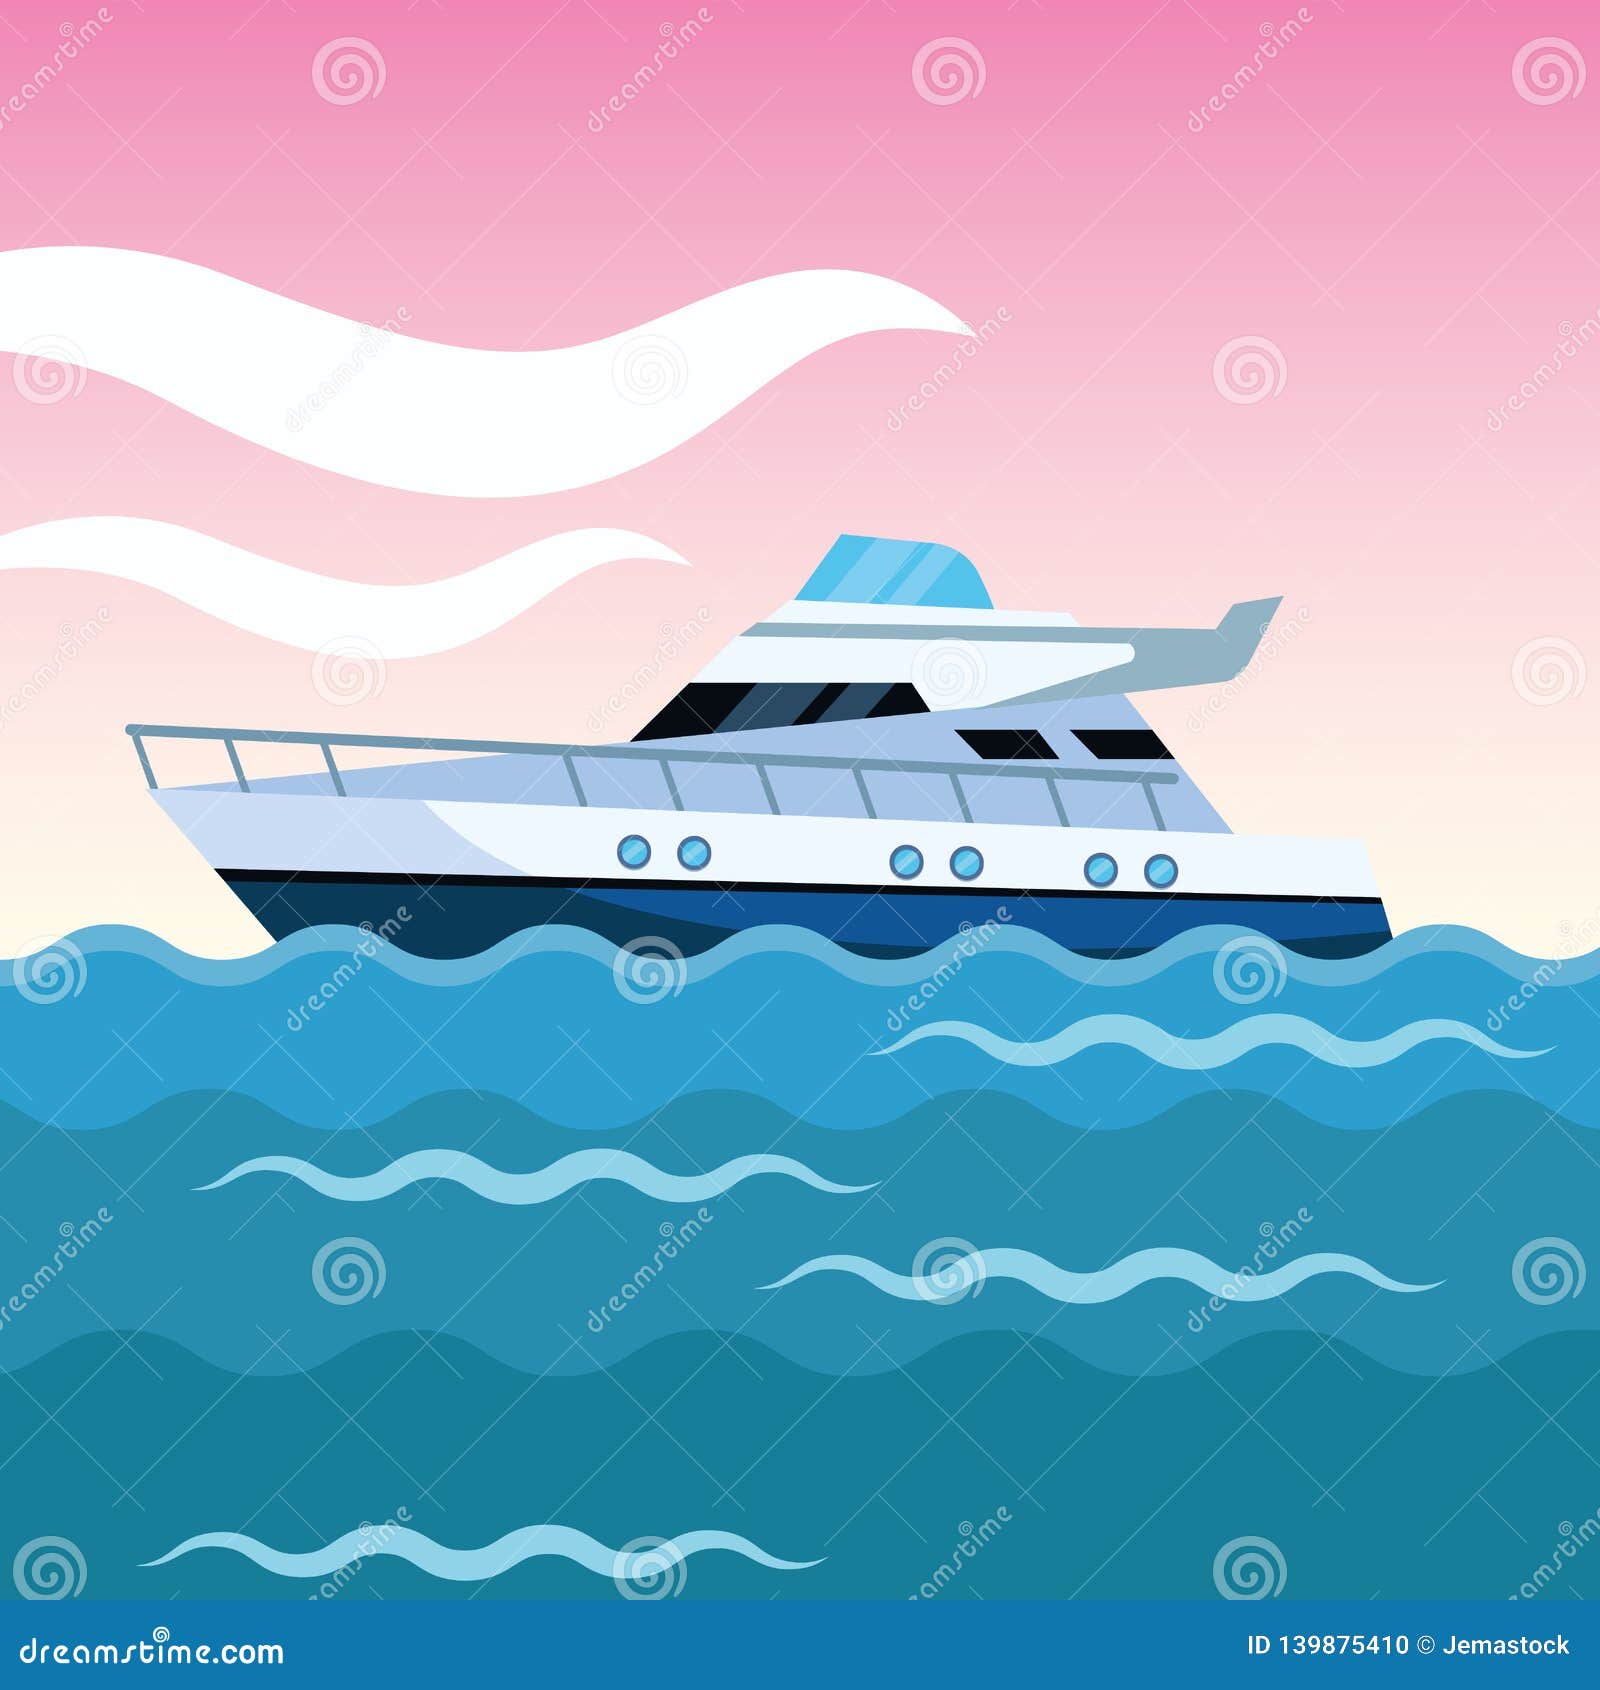 Yacht boat cartoon stock vector. Illustration of boat - 139875410